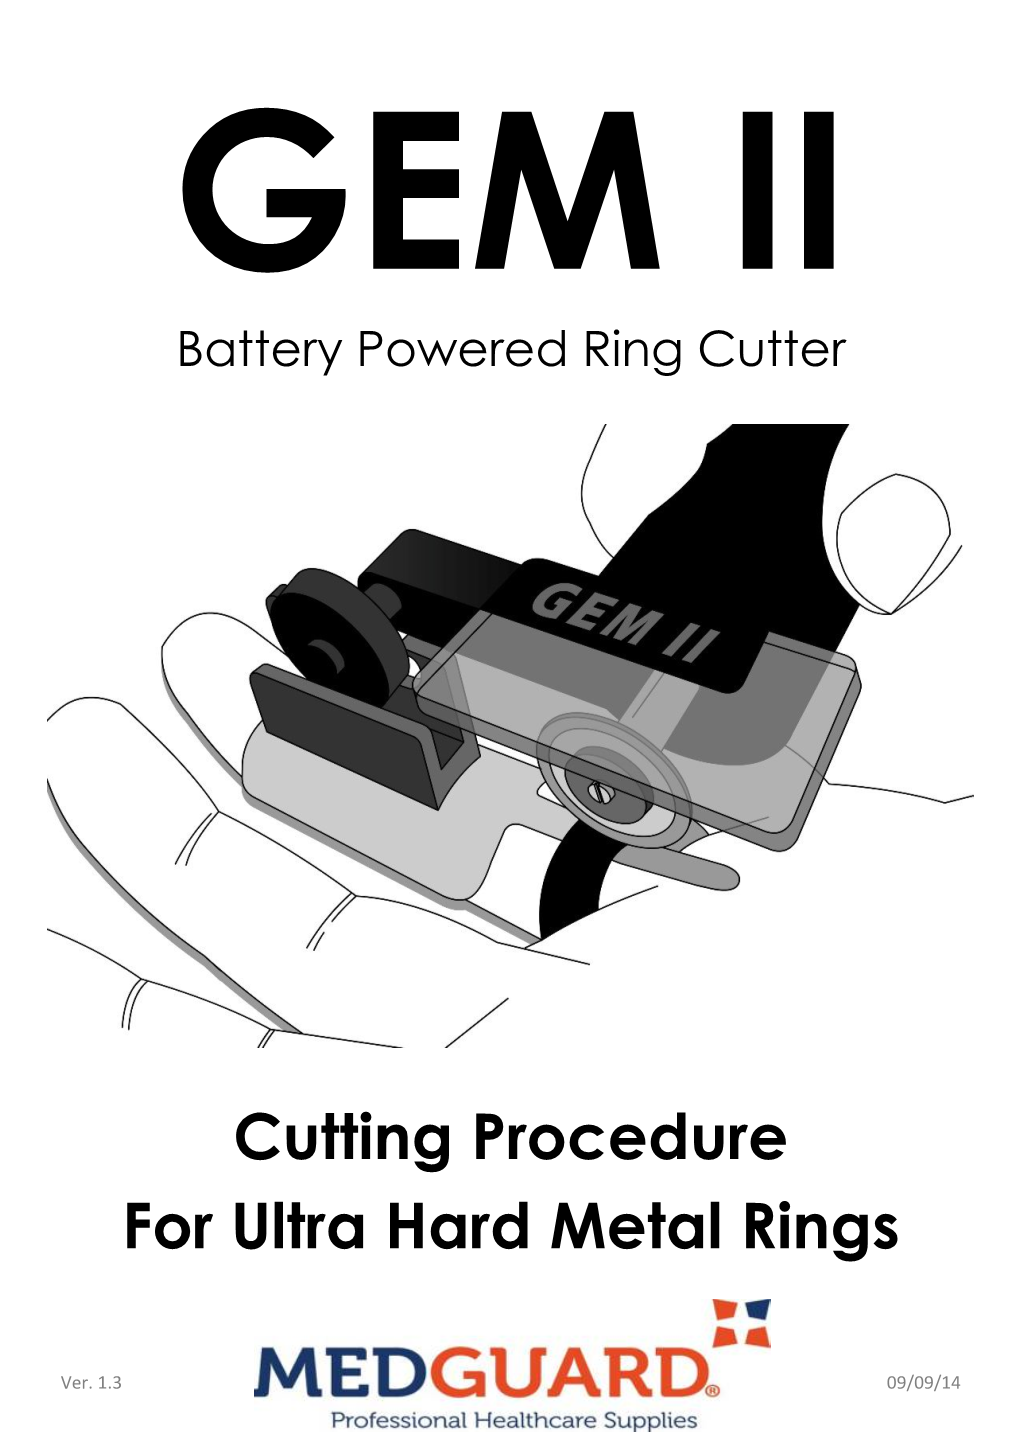 Cutting Procedure for Ultra Hard Metal Rings